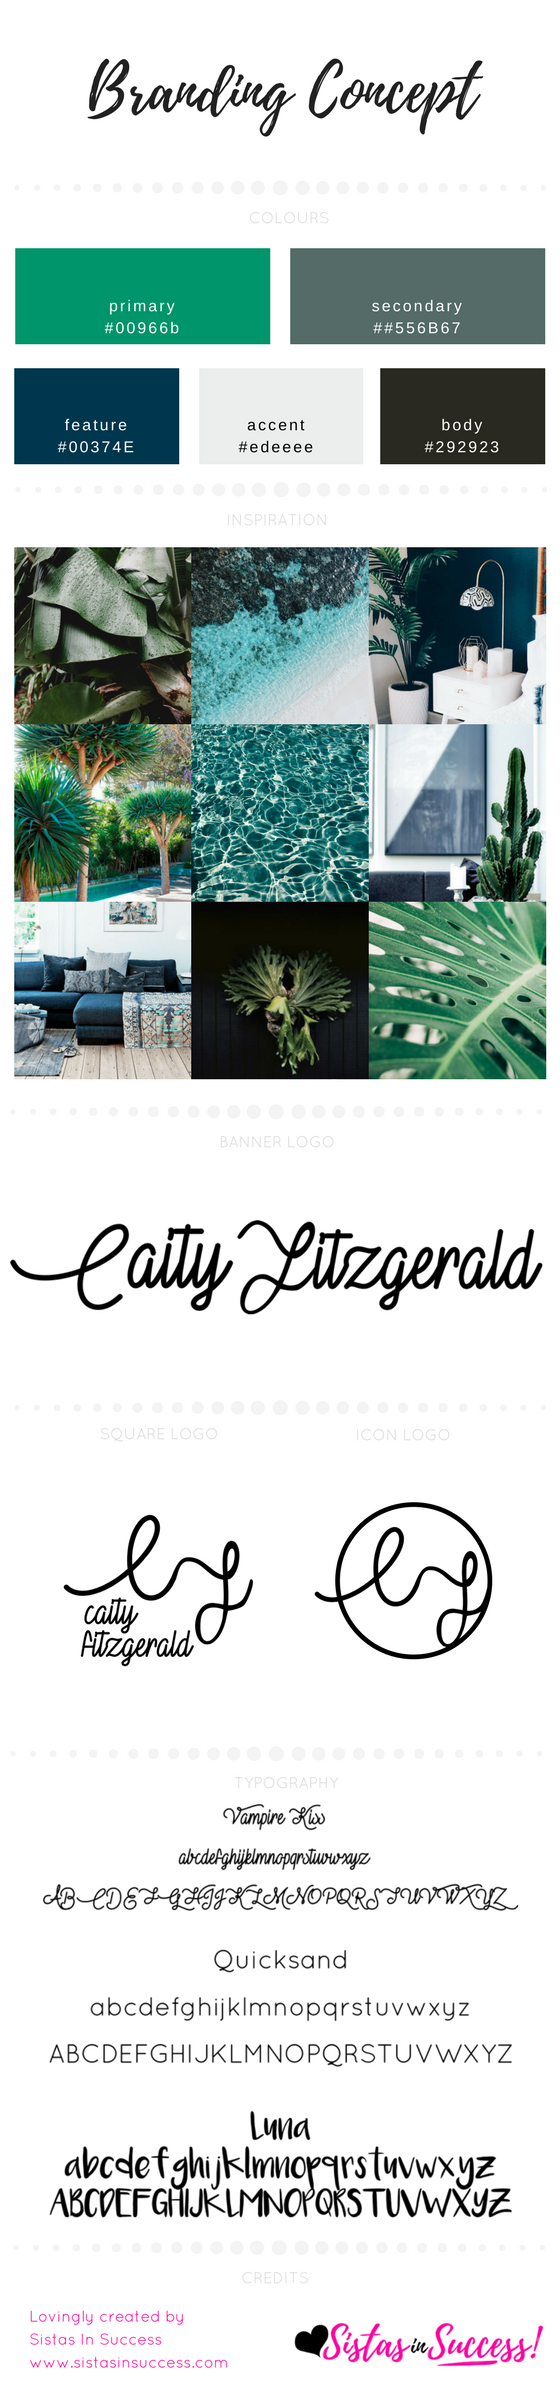 Caity Fitzgerald Branding Concept